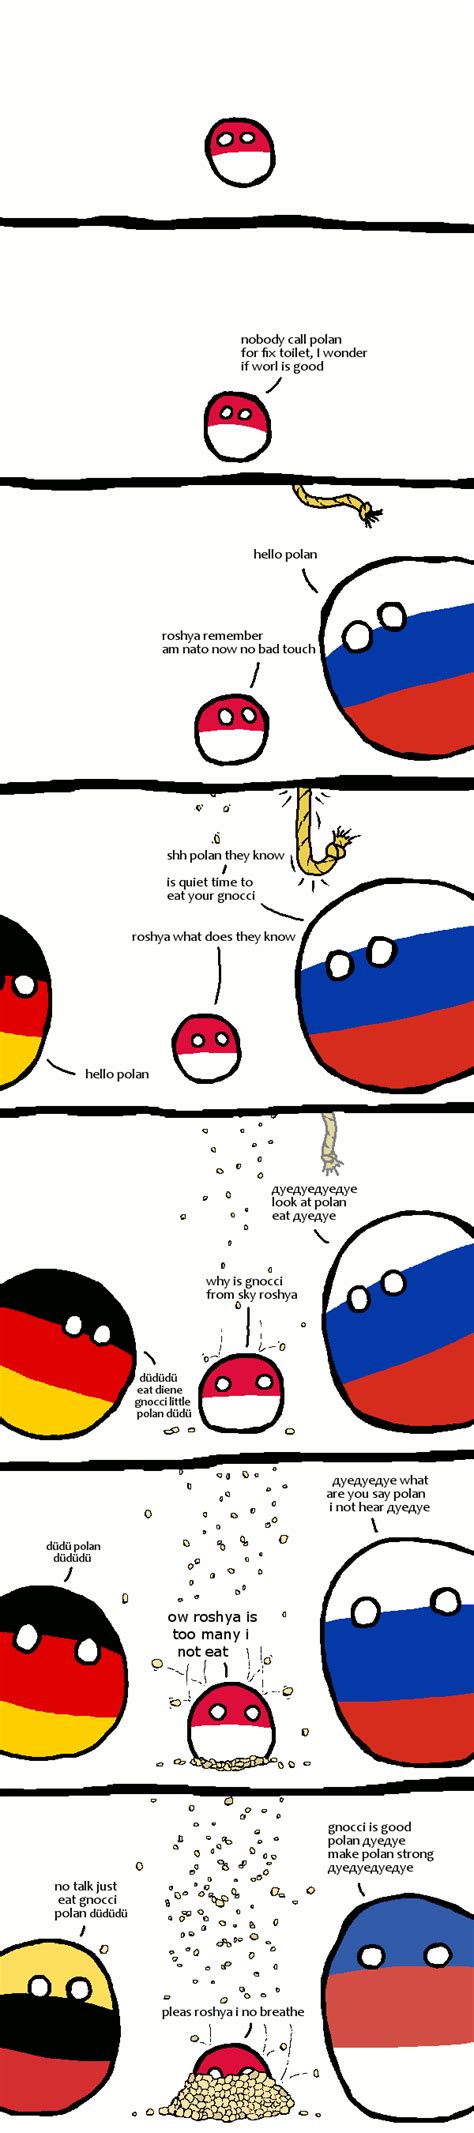 Poland Is Alone Via Reddit Online Comics Country Humor Fun Comics